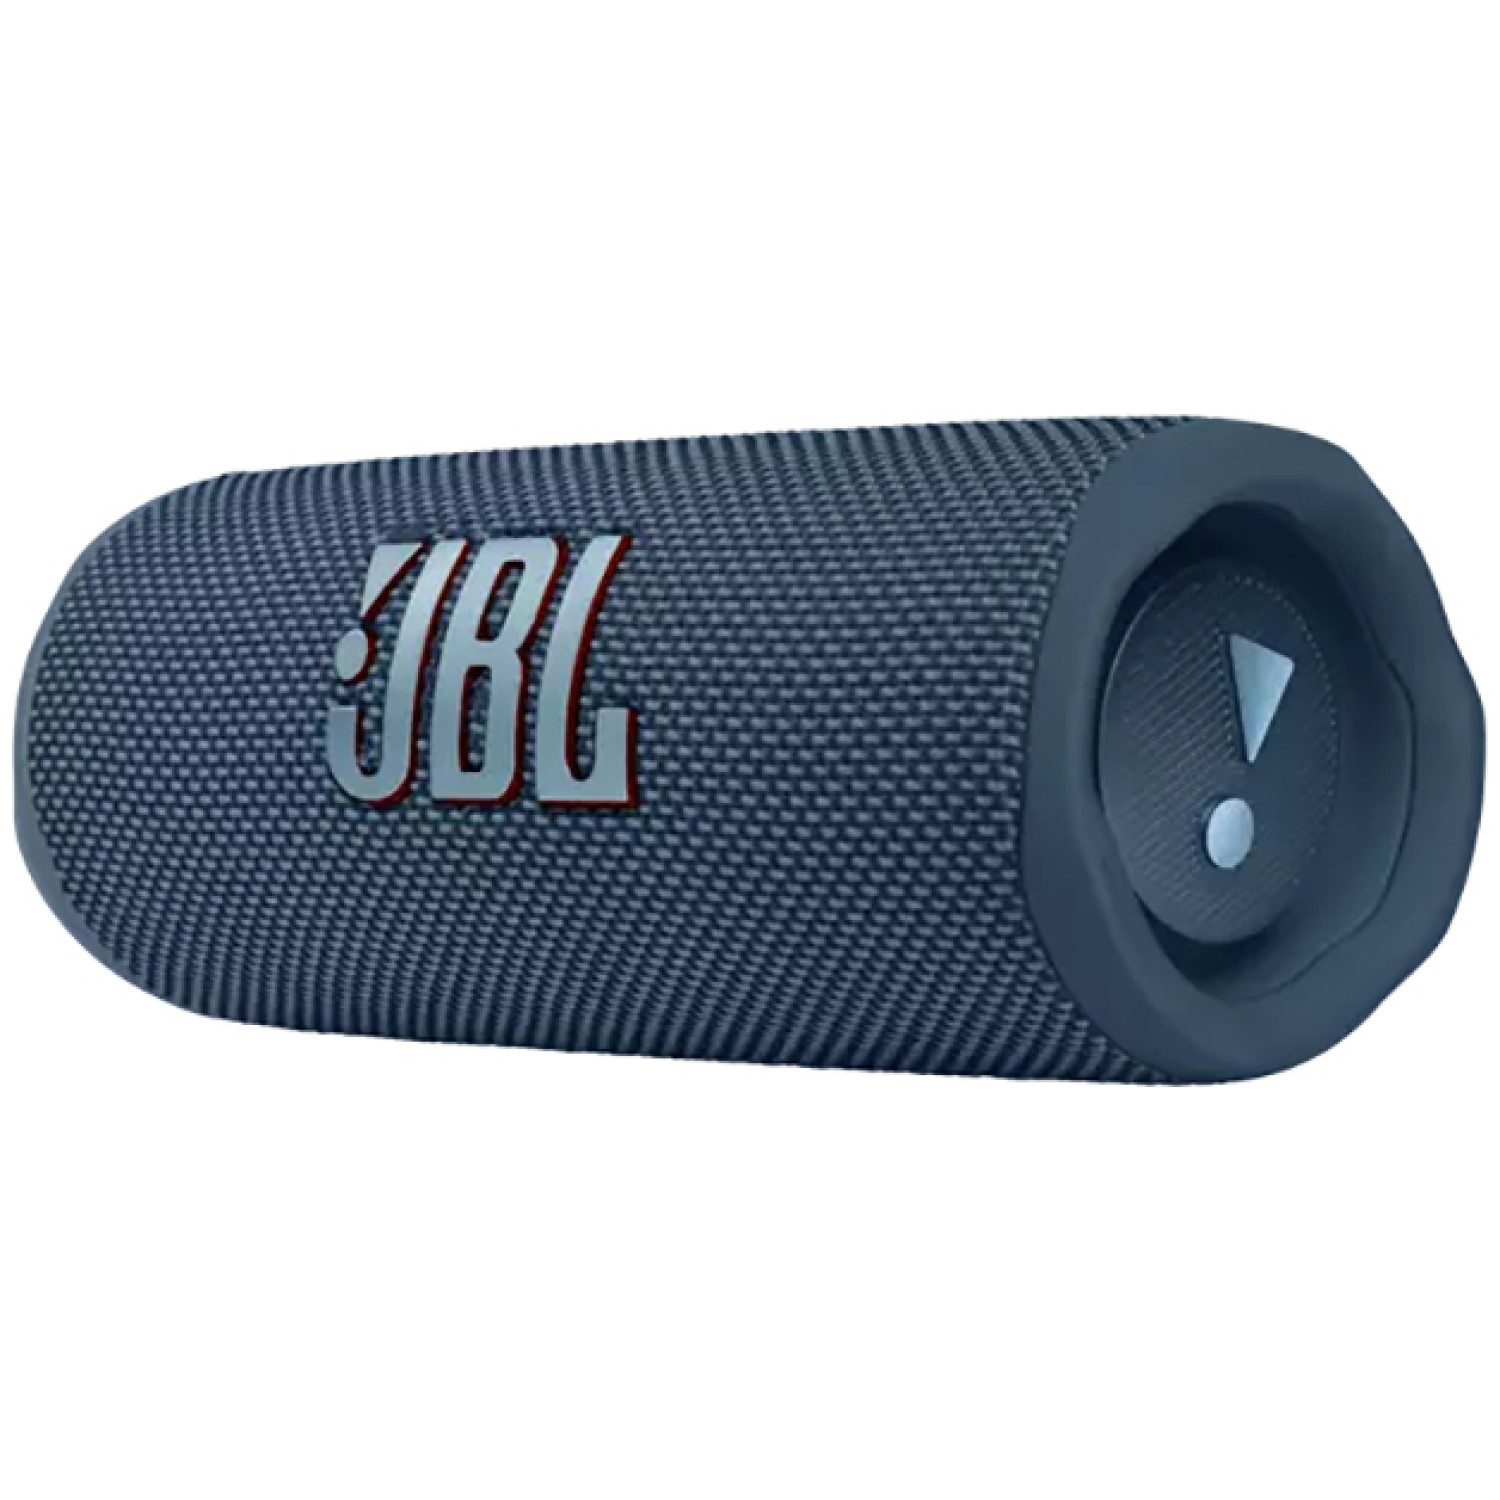 Zvočnik Bluetooth JBL Flip 6 moder